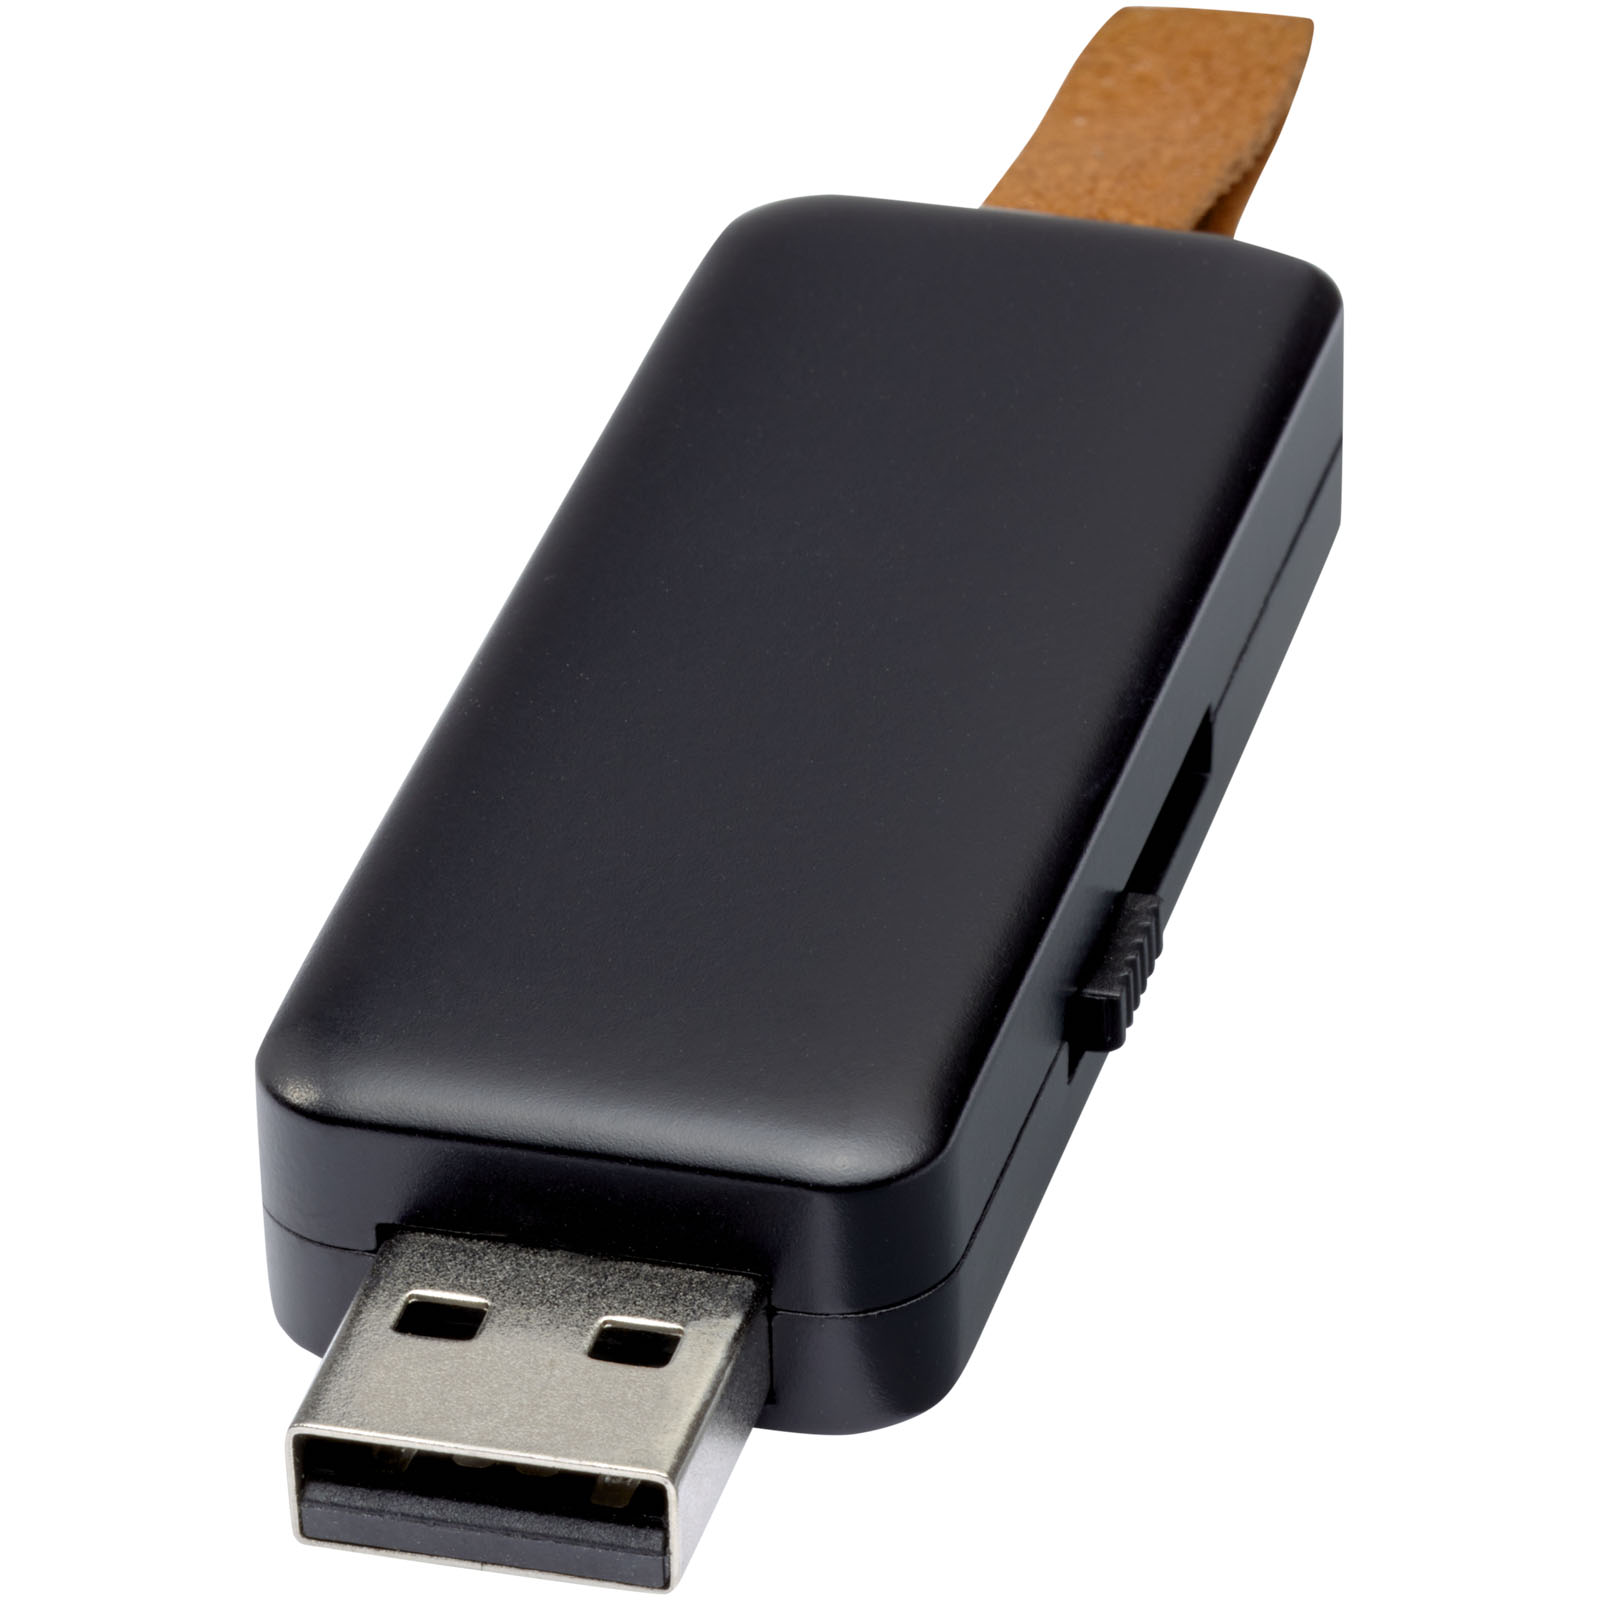 Clés USB publicitaires - Clé USB lumineuse Gleam 16 Go - 0